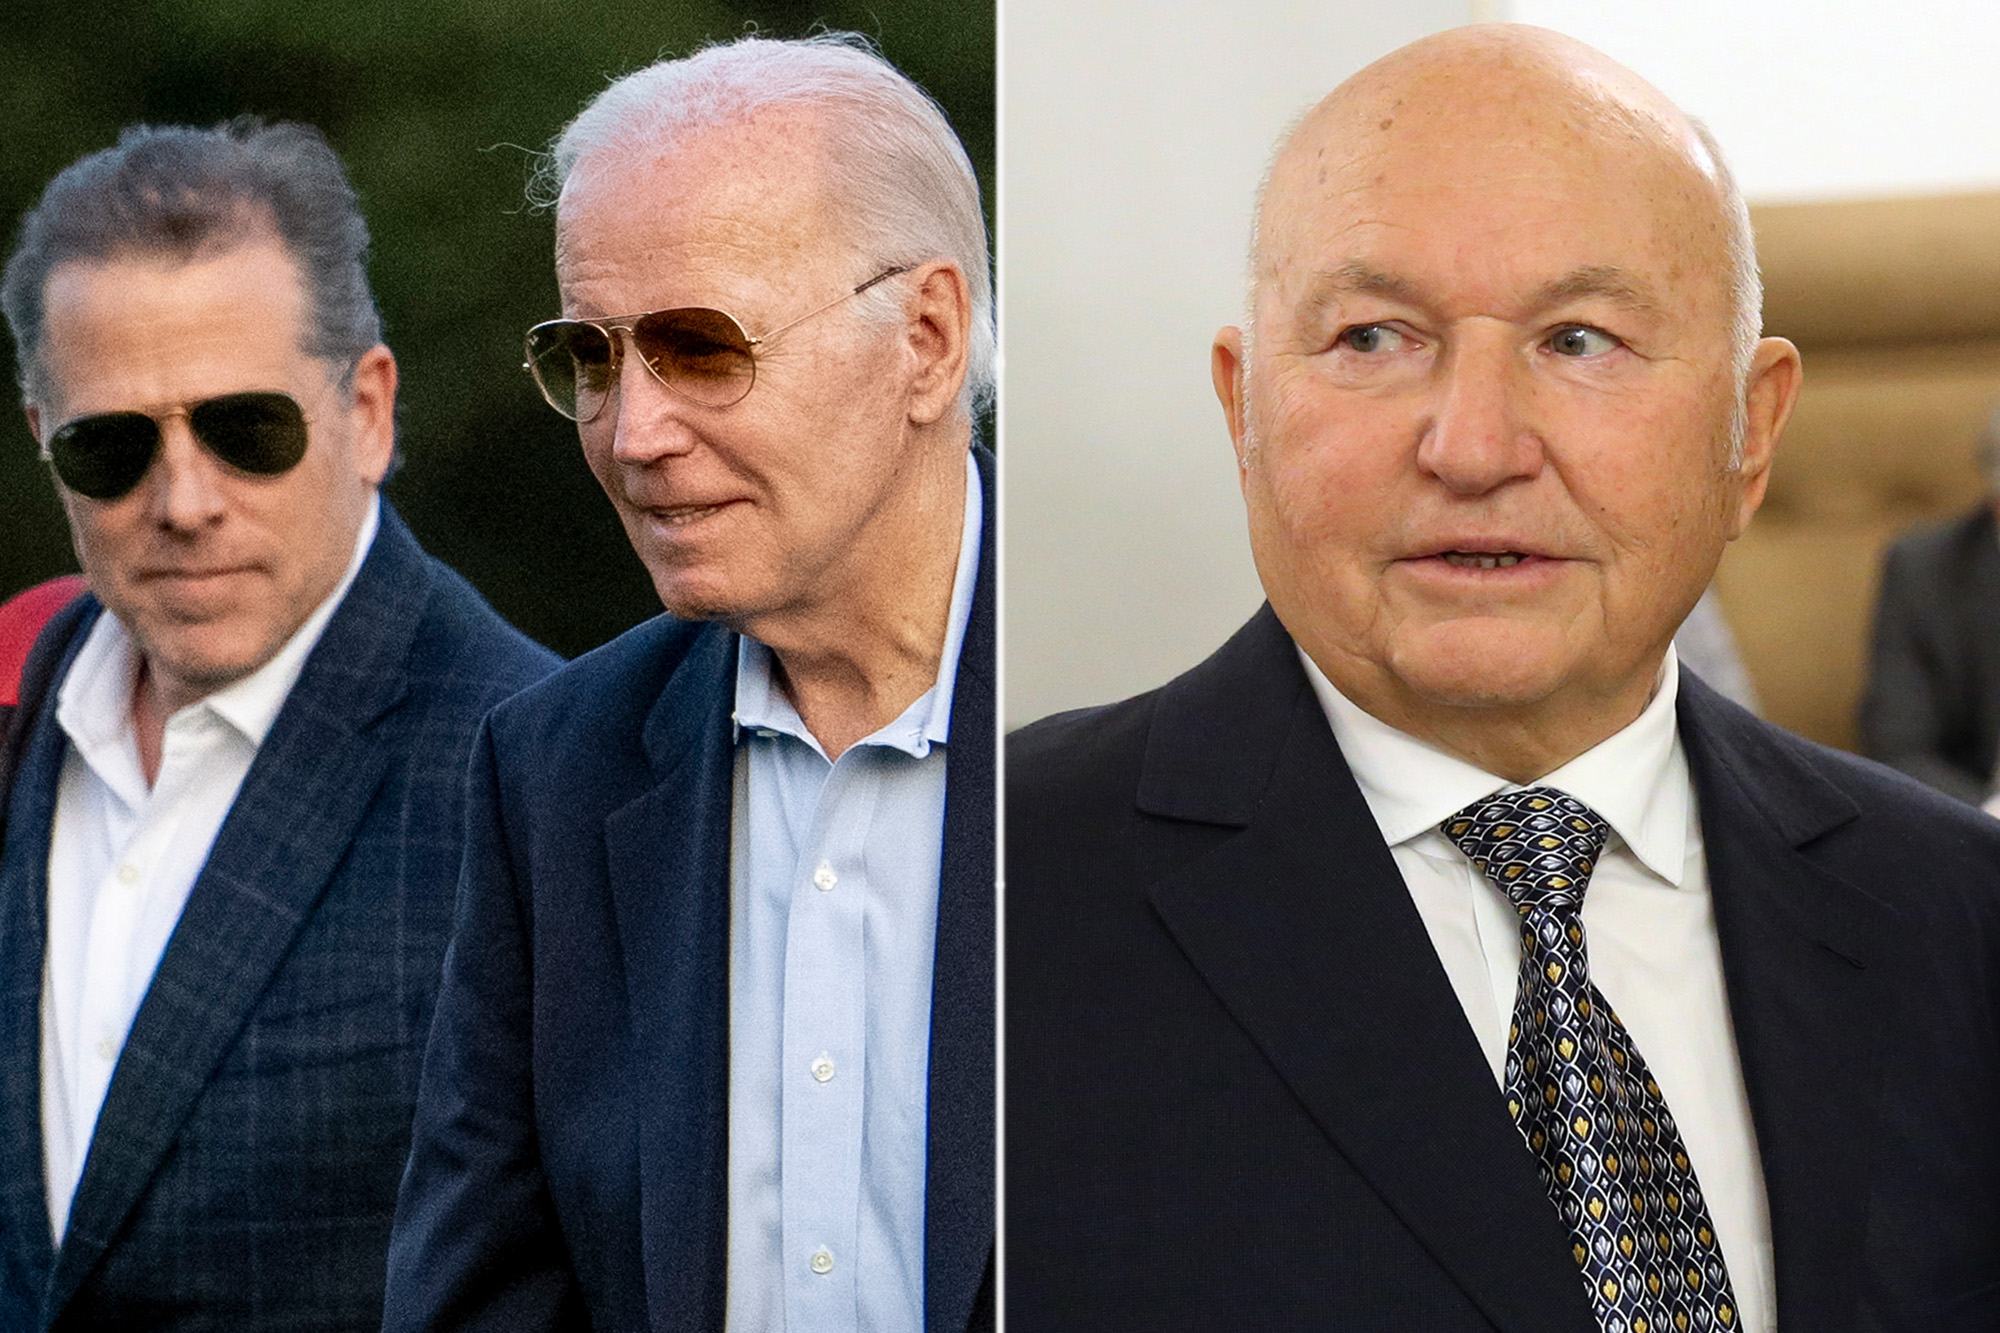 Yury Luzhkov and Joe Biden in a collage.